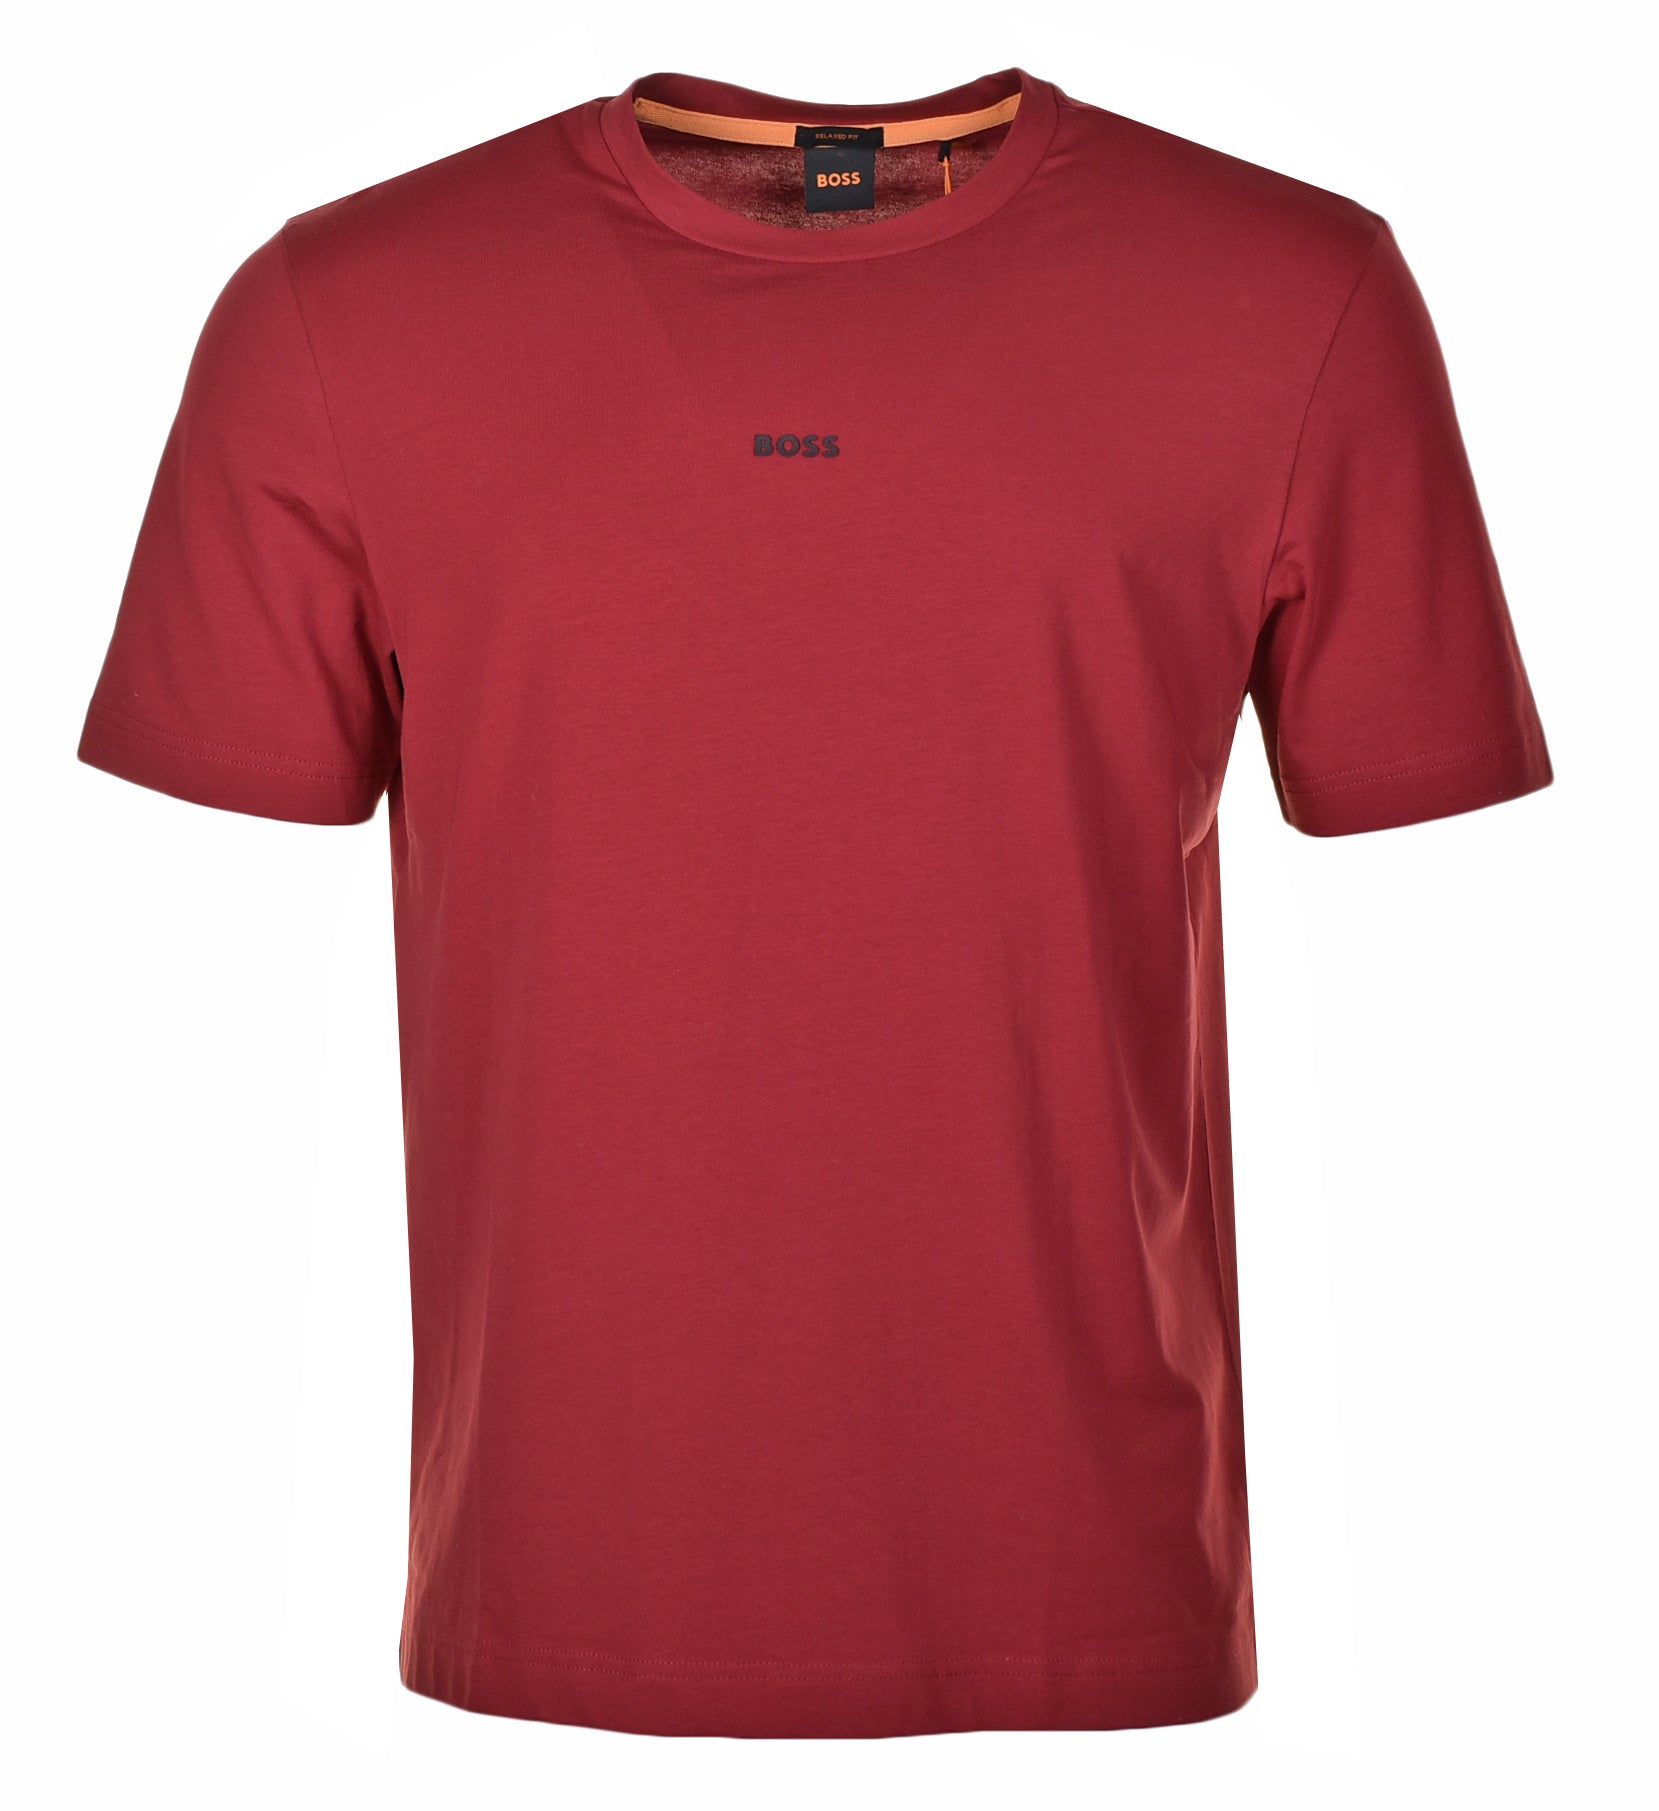 TChup T Shirt 614 Medium Red